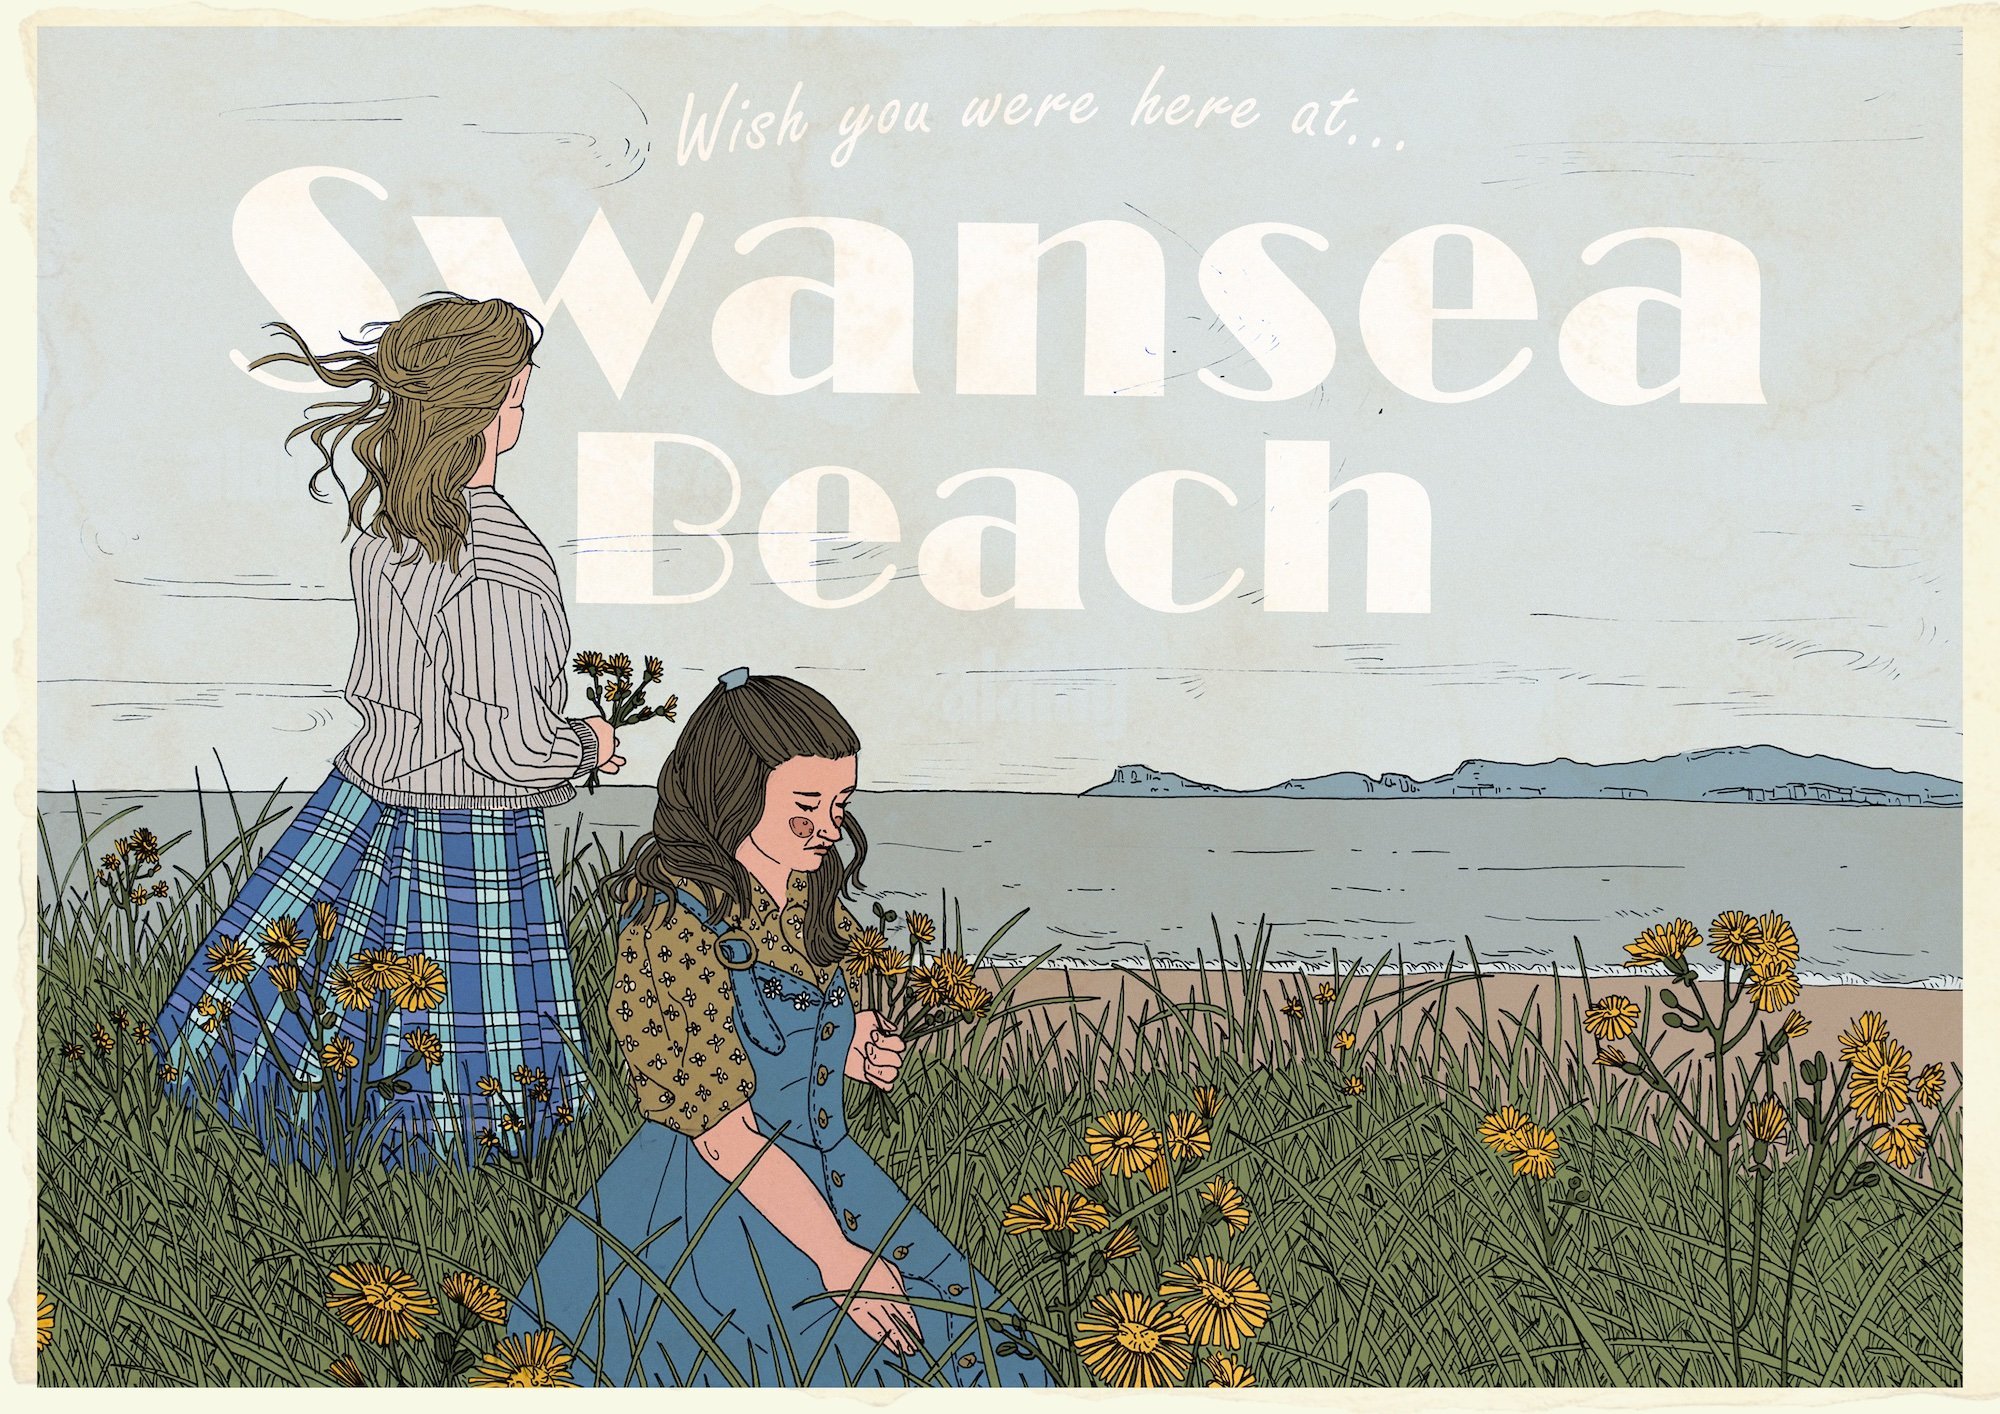 Swansea Beach Postcard, Katie Baugh